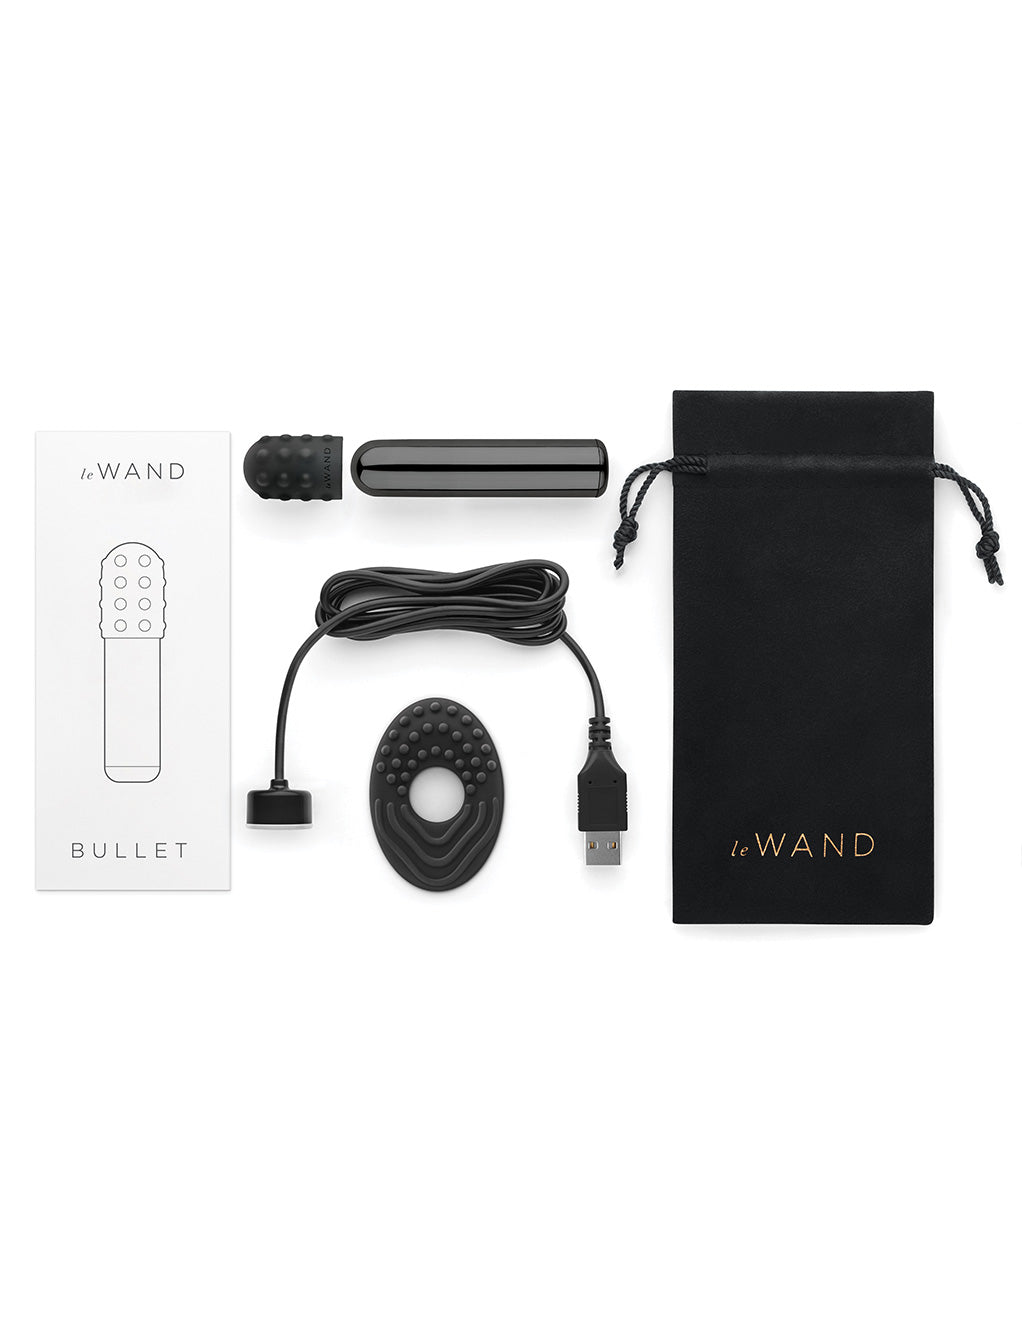 Le Wand Bullet Rechargeable Clitoral Vibrator- Black- Contents